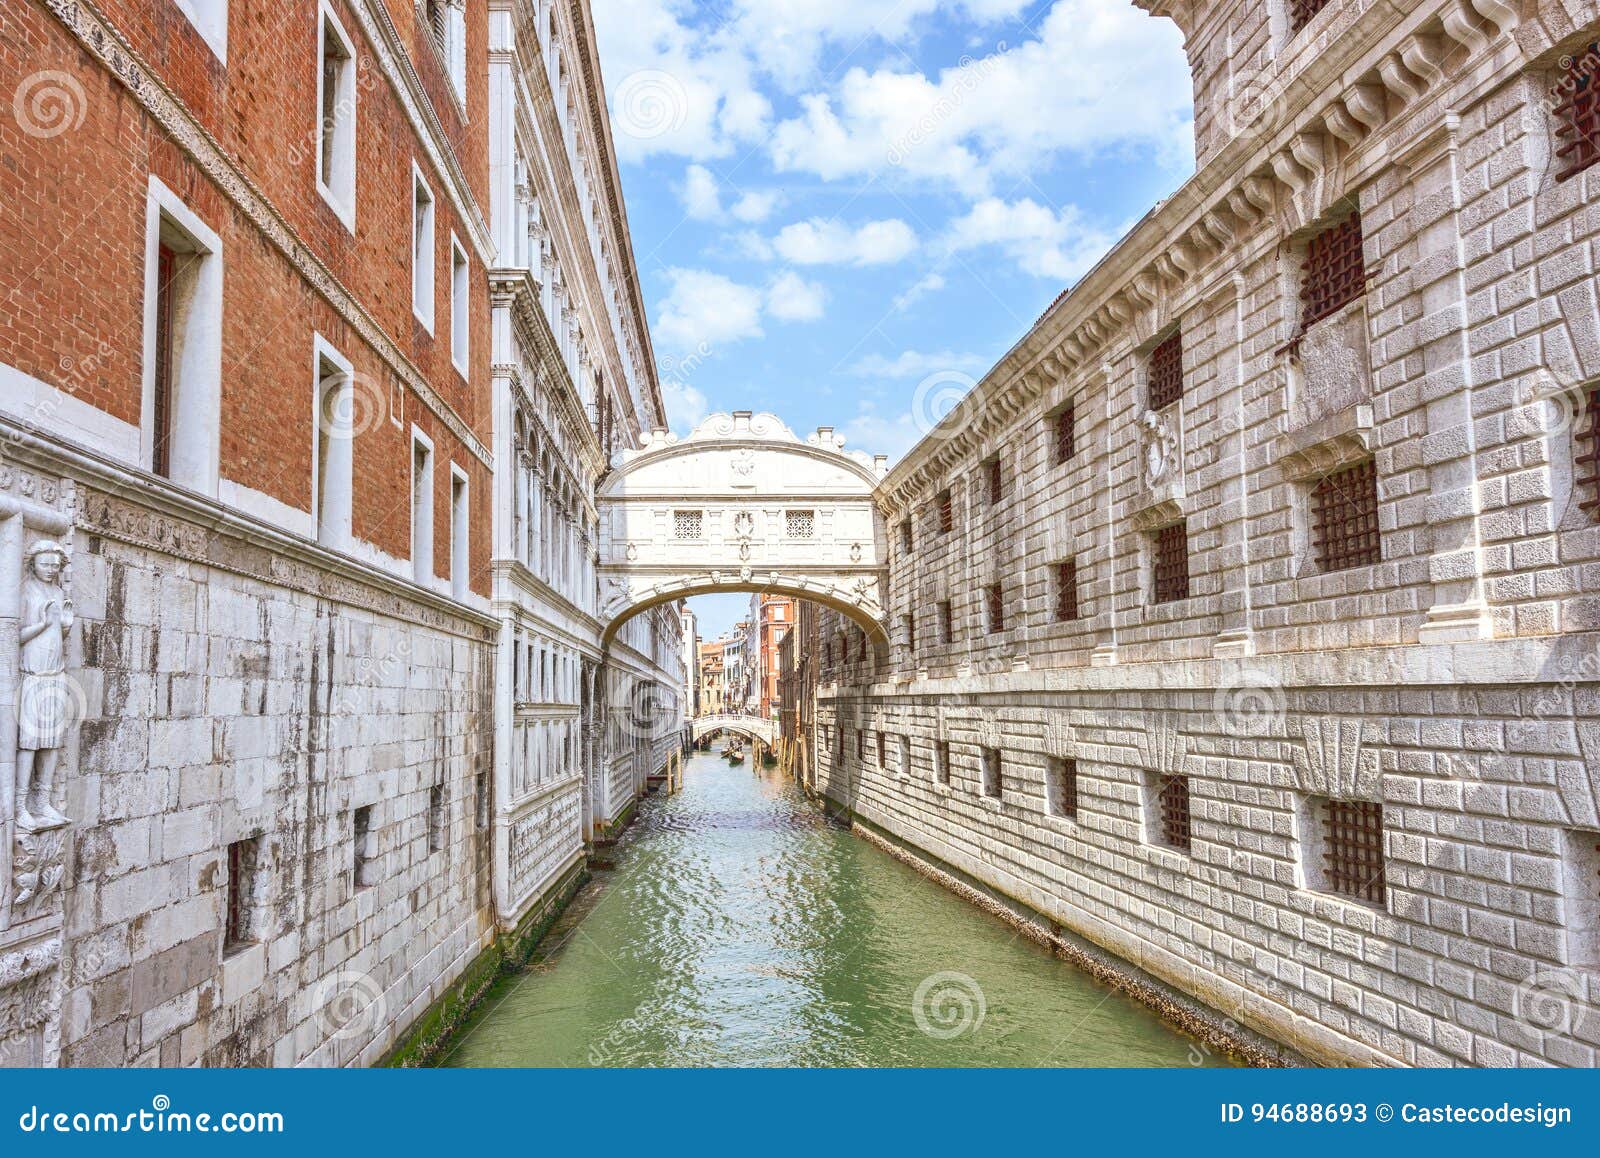 venice scenic old streets water canal. italian lagoon beauty